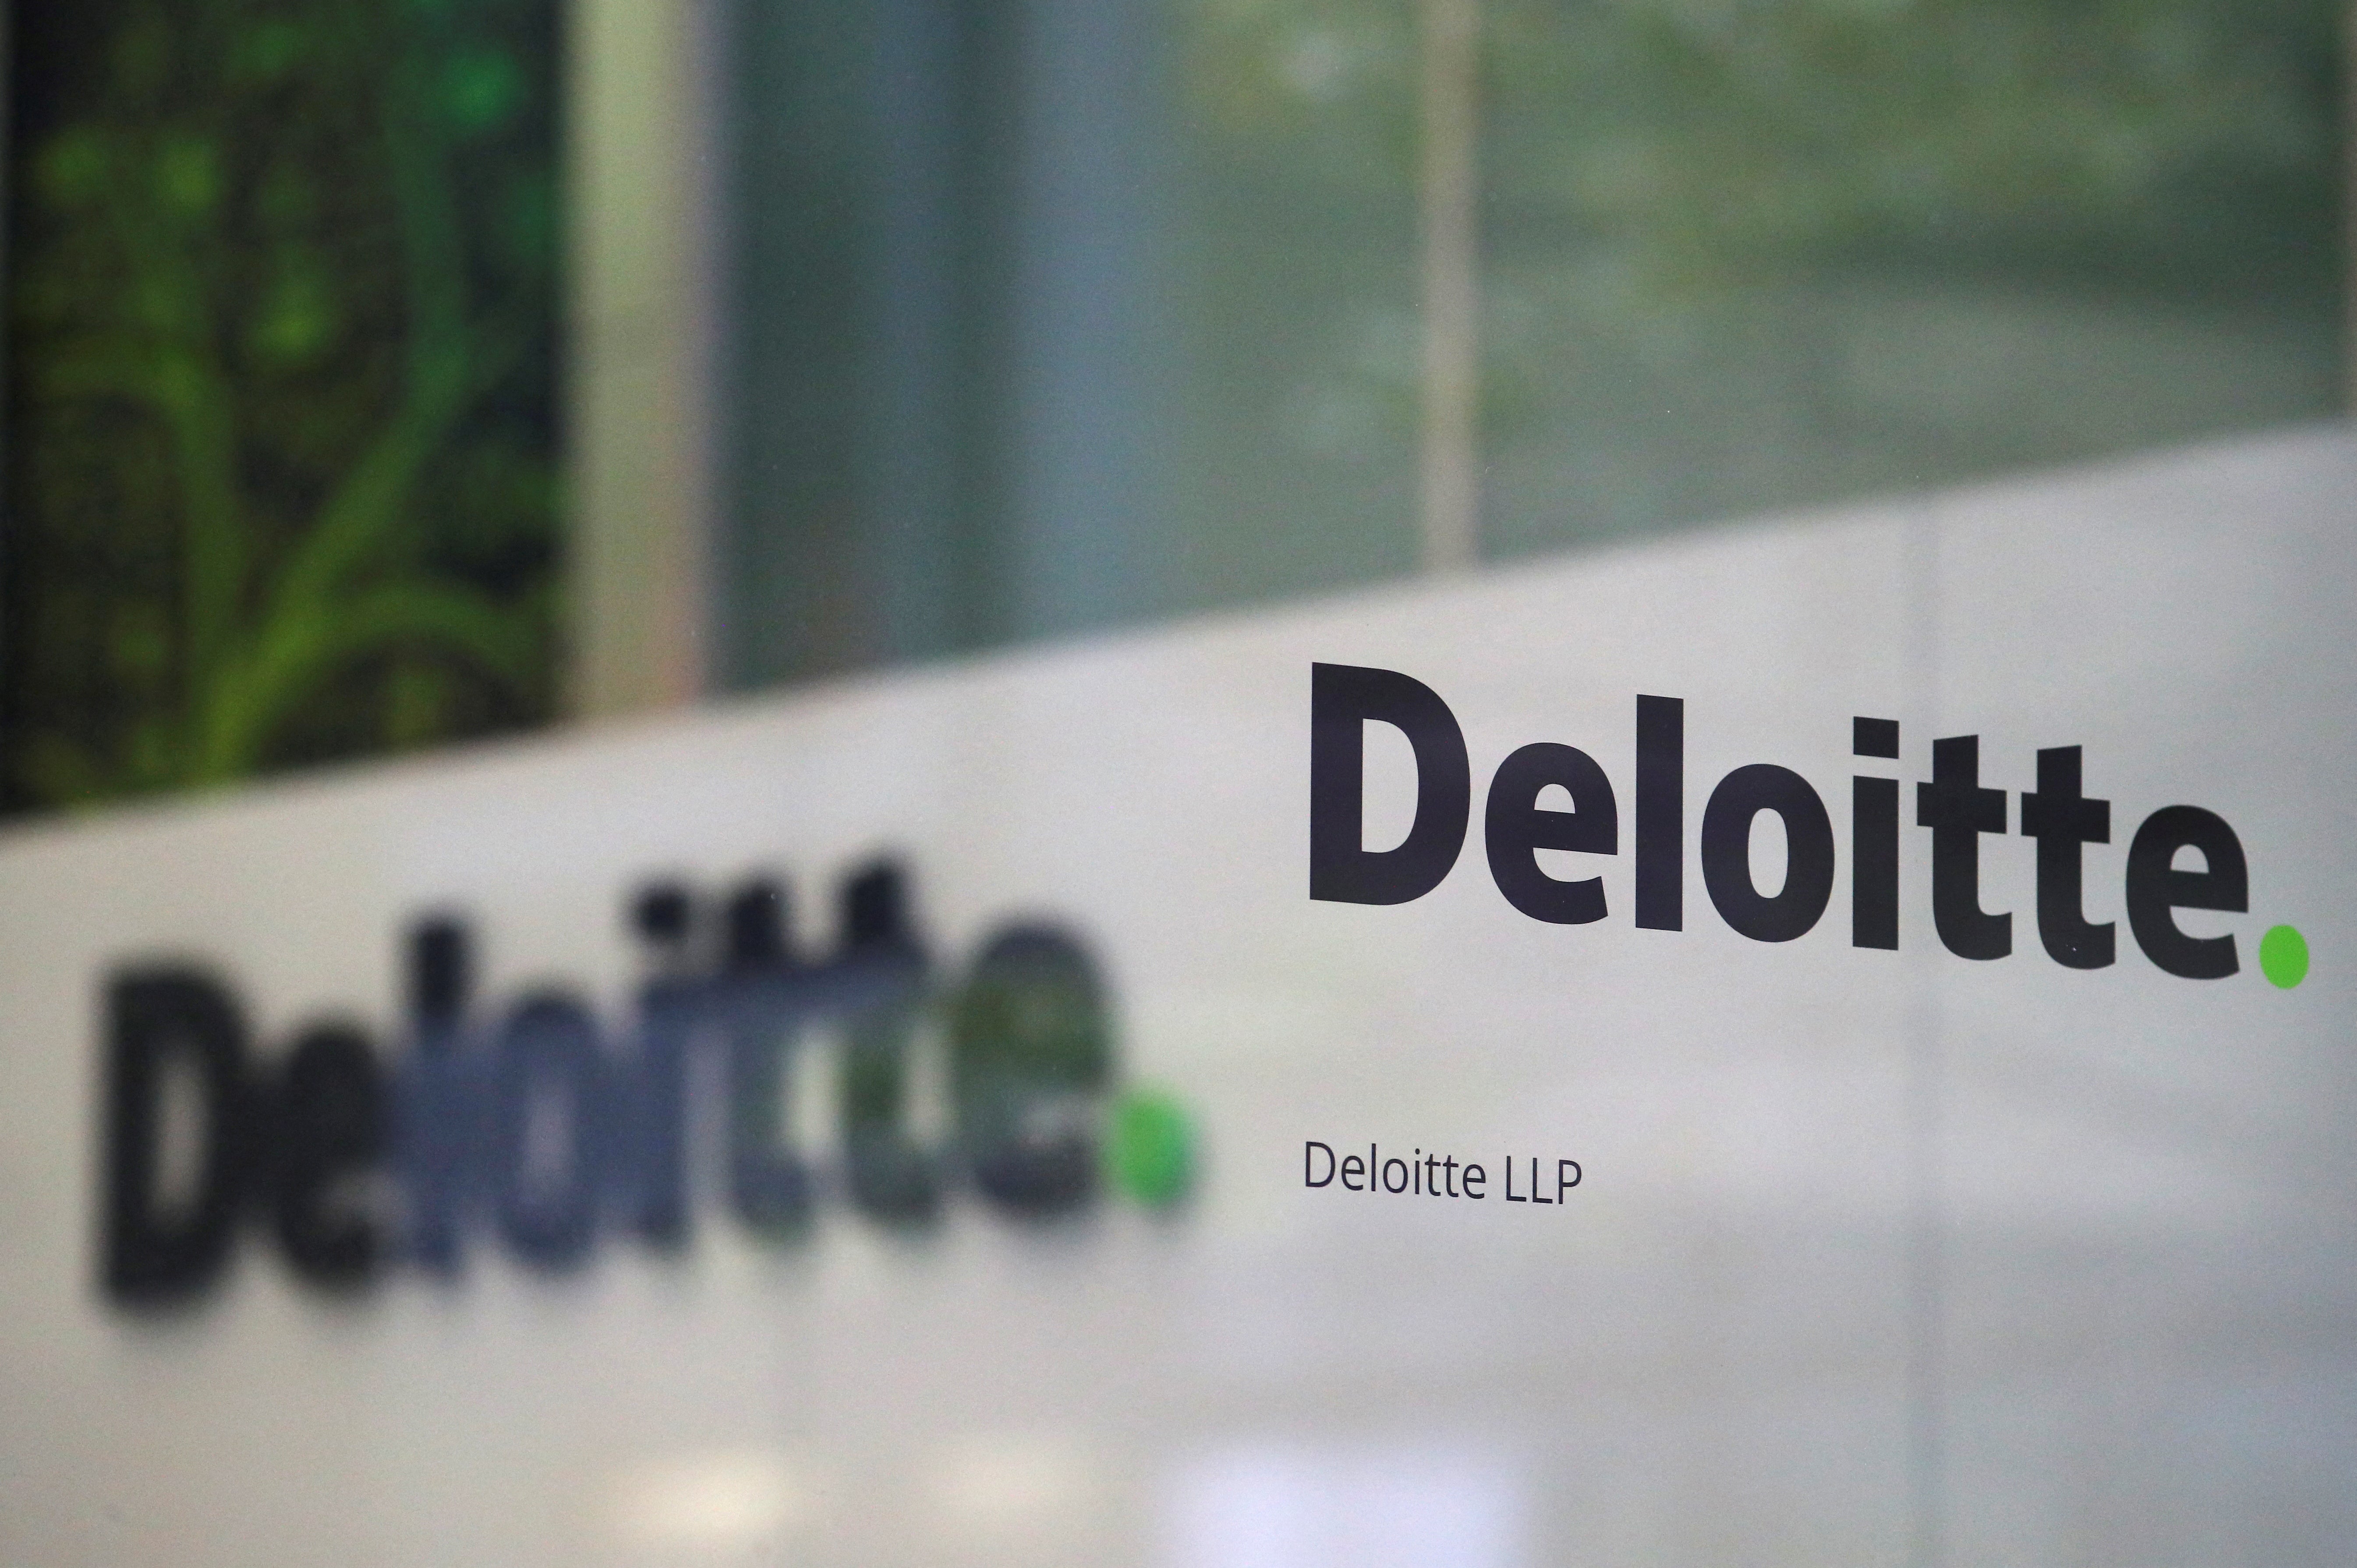 Deloitte is letting its UK employees choose when to take public